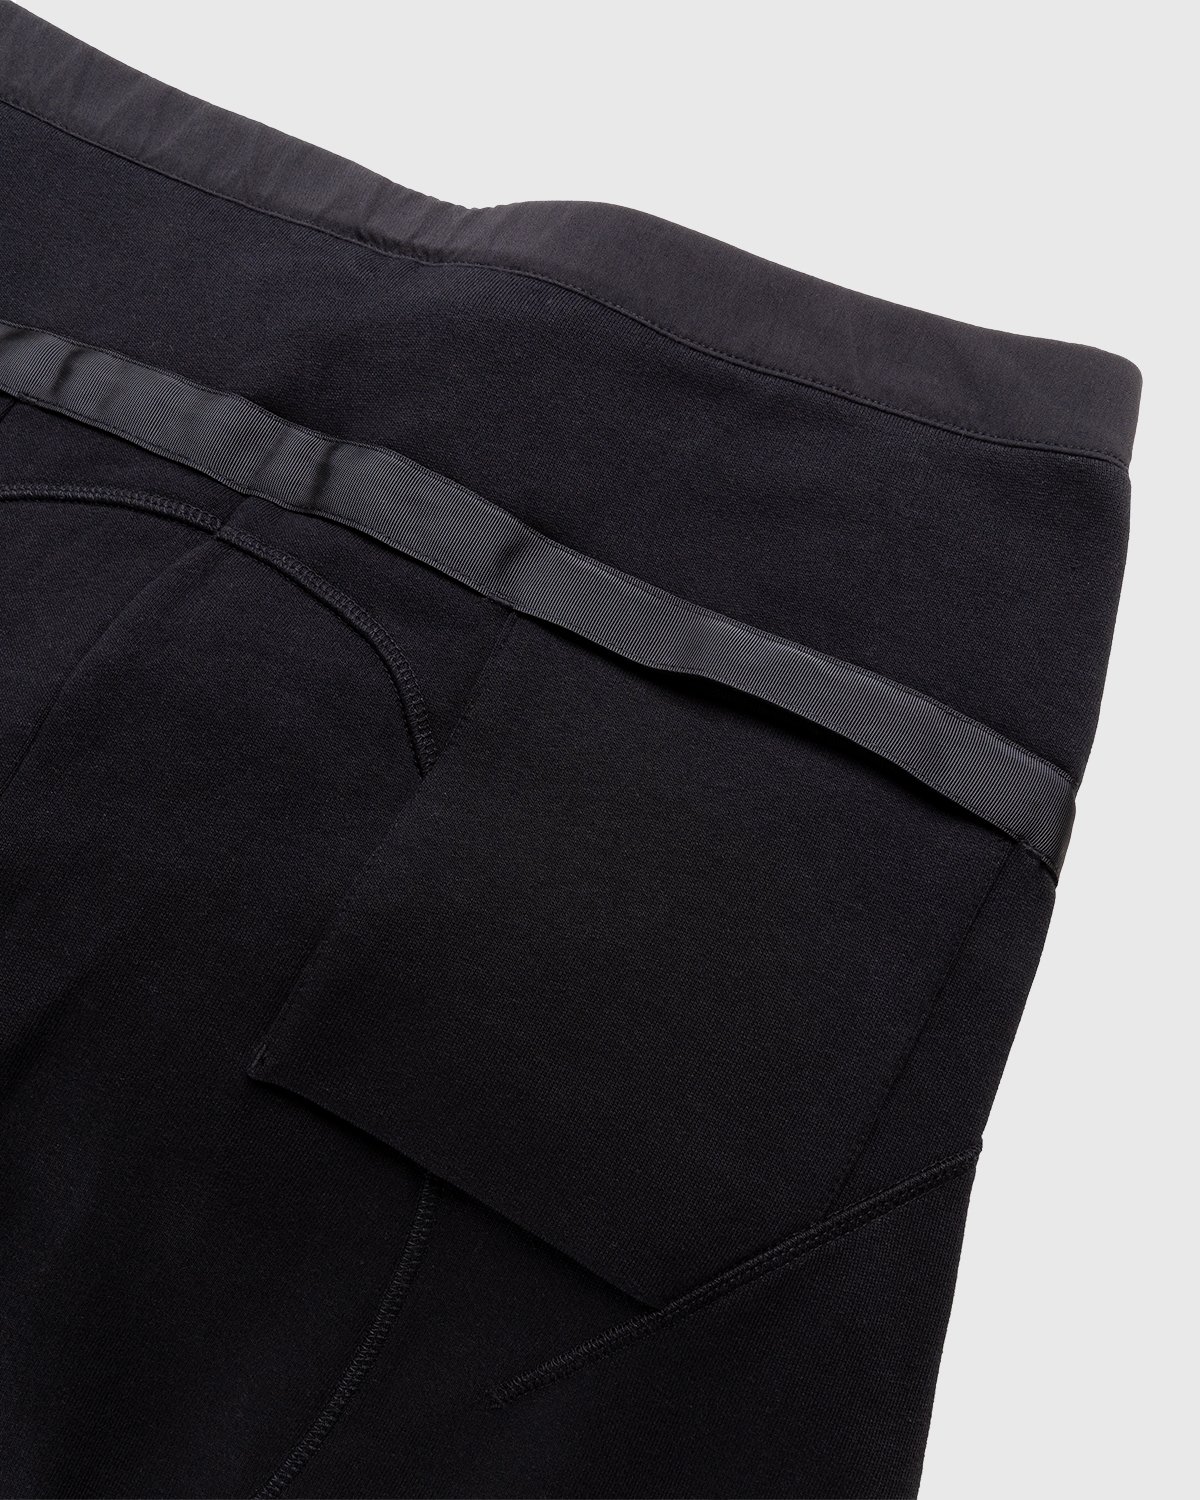 ACRONYM - P39-PR Pants Black - Clothing - Black - Image 4